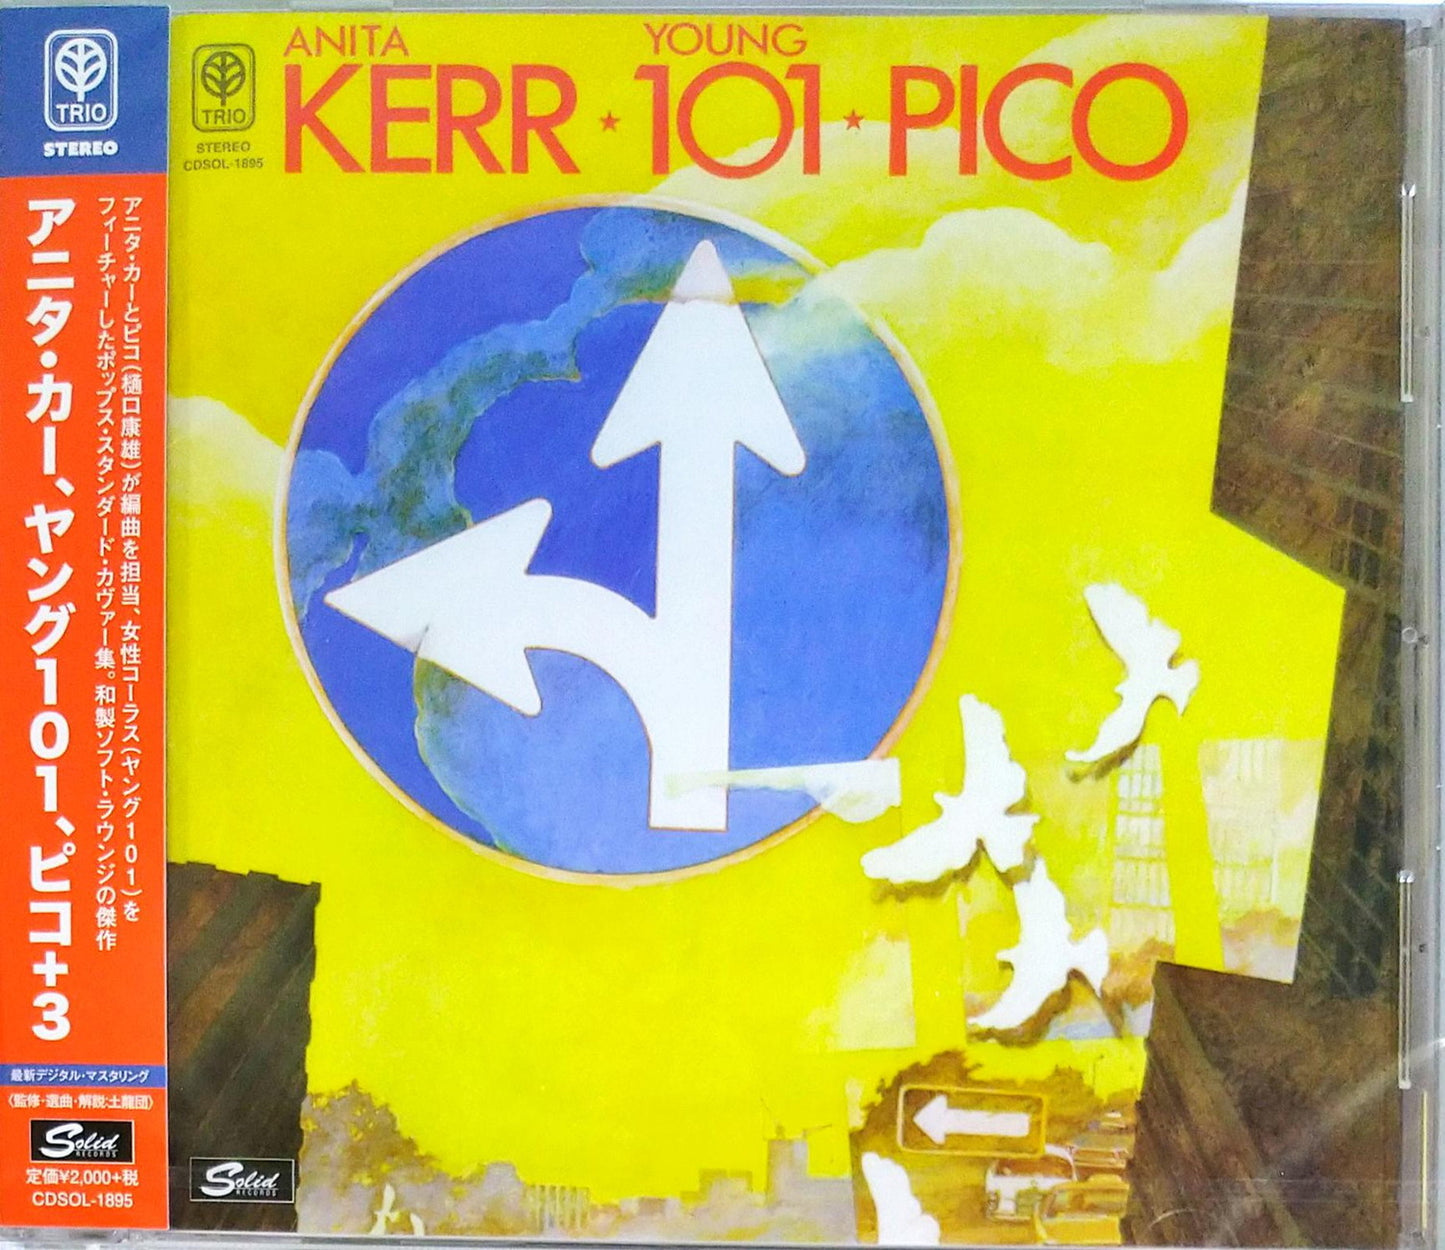 Anita Kerr & Young 101 & Pico - Anita Kerr & Young 101& Pico - Japan CD